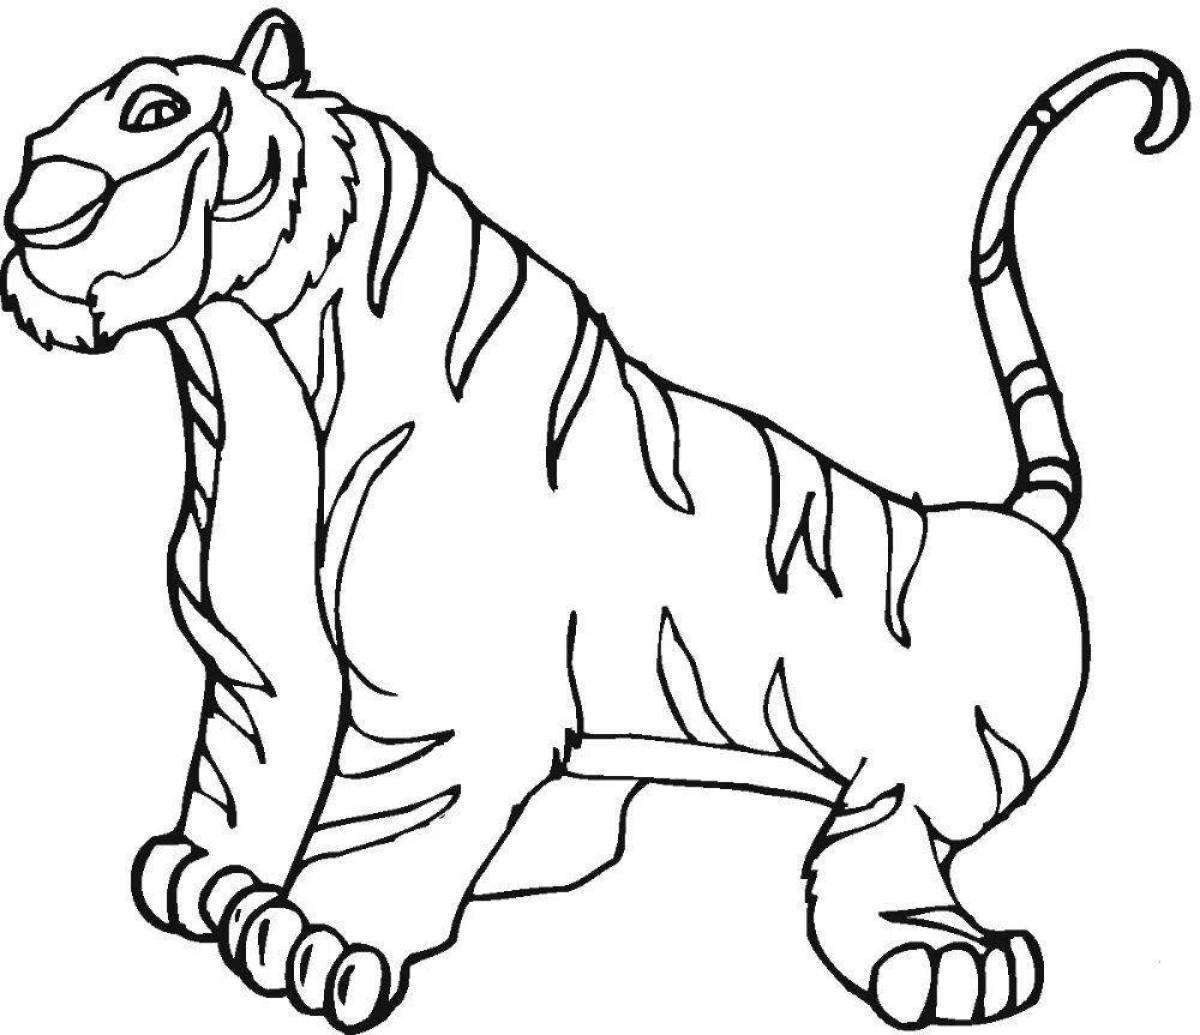 Fun tiger coloring for kids